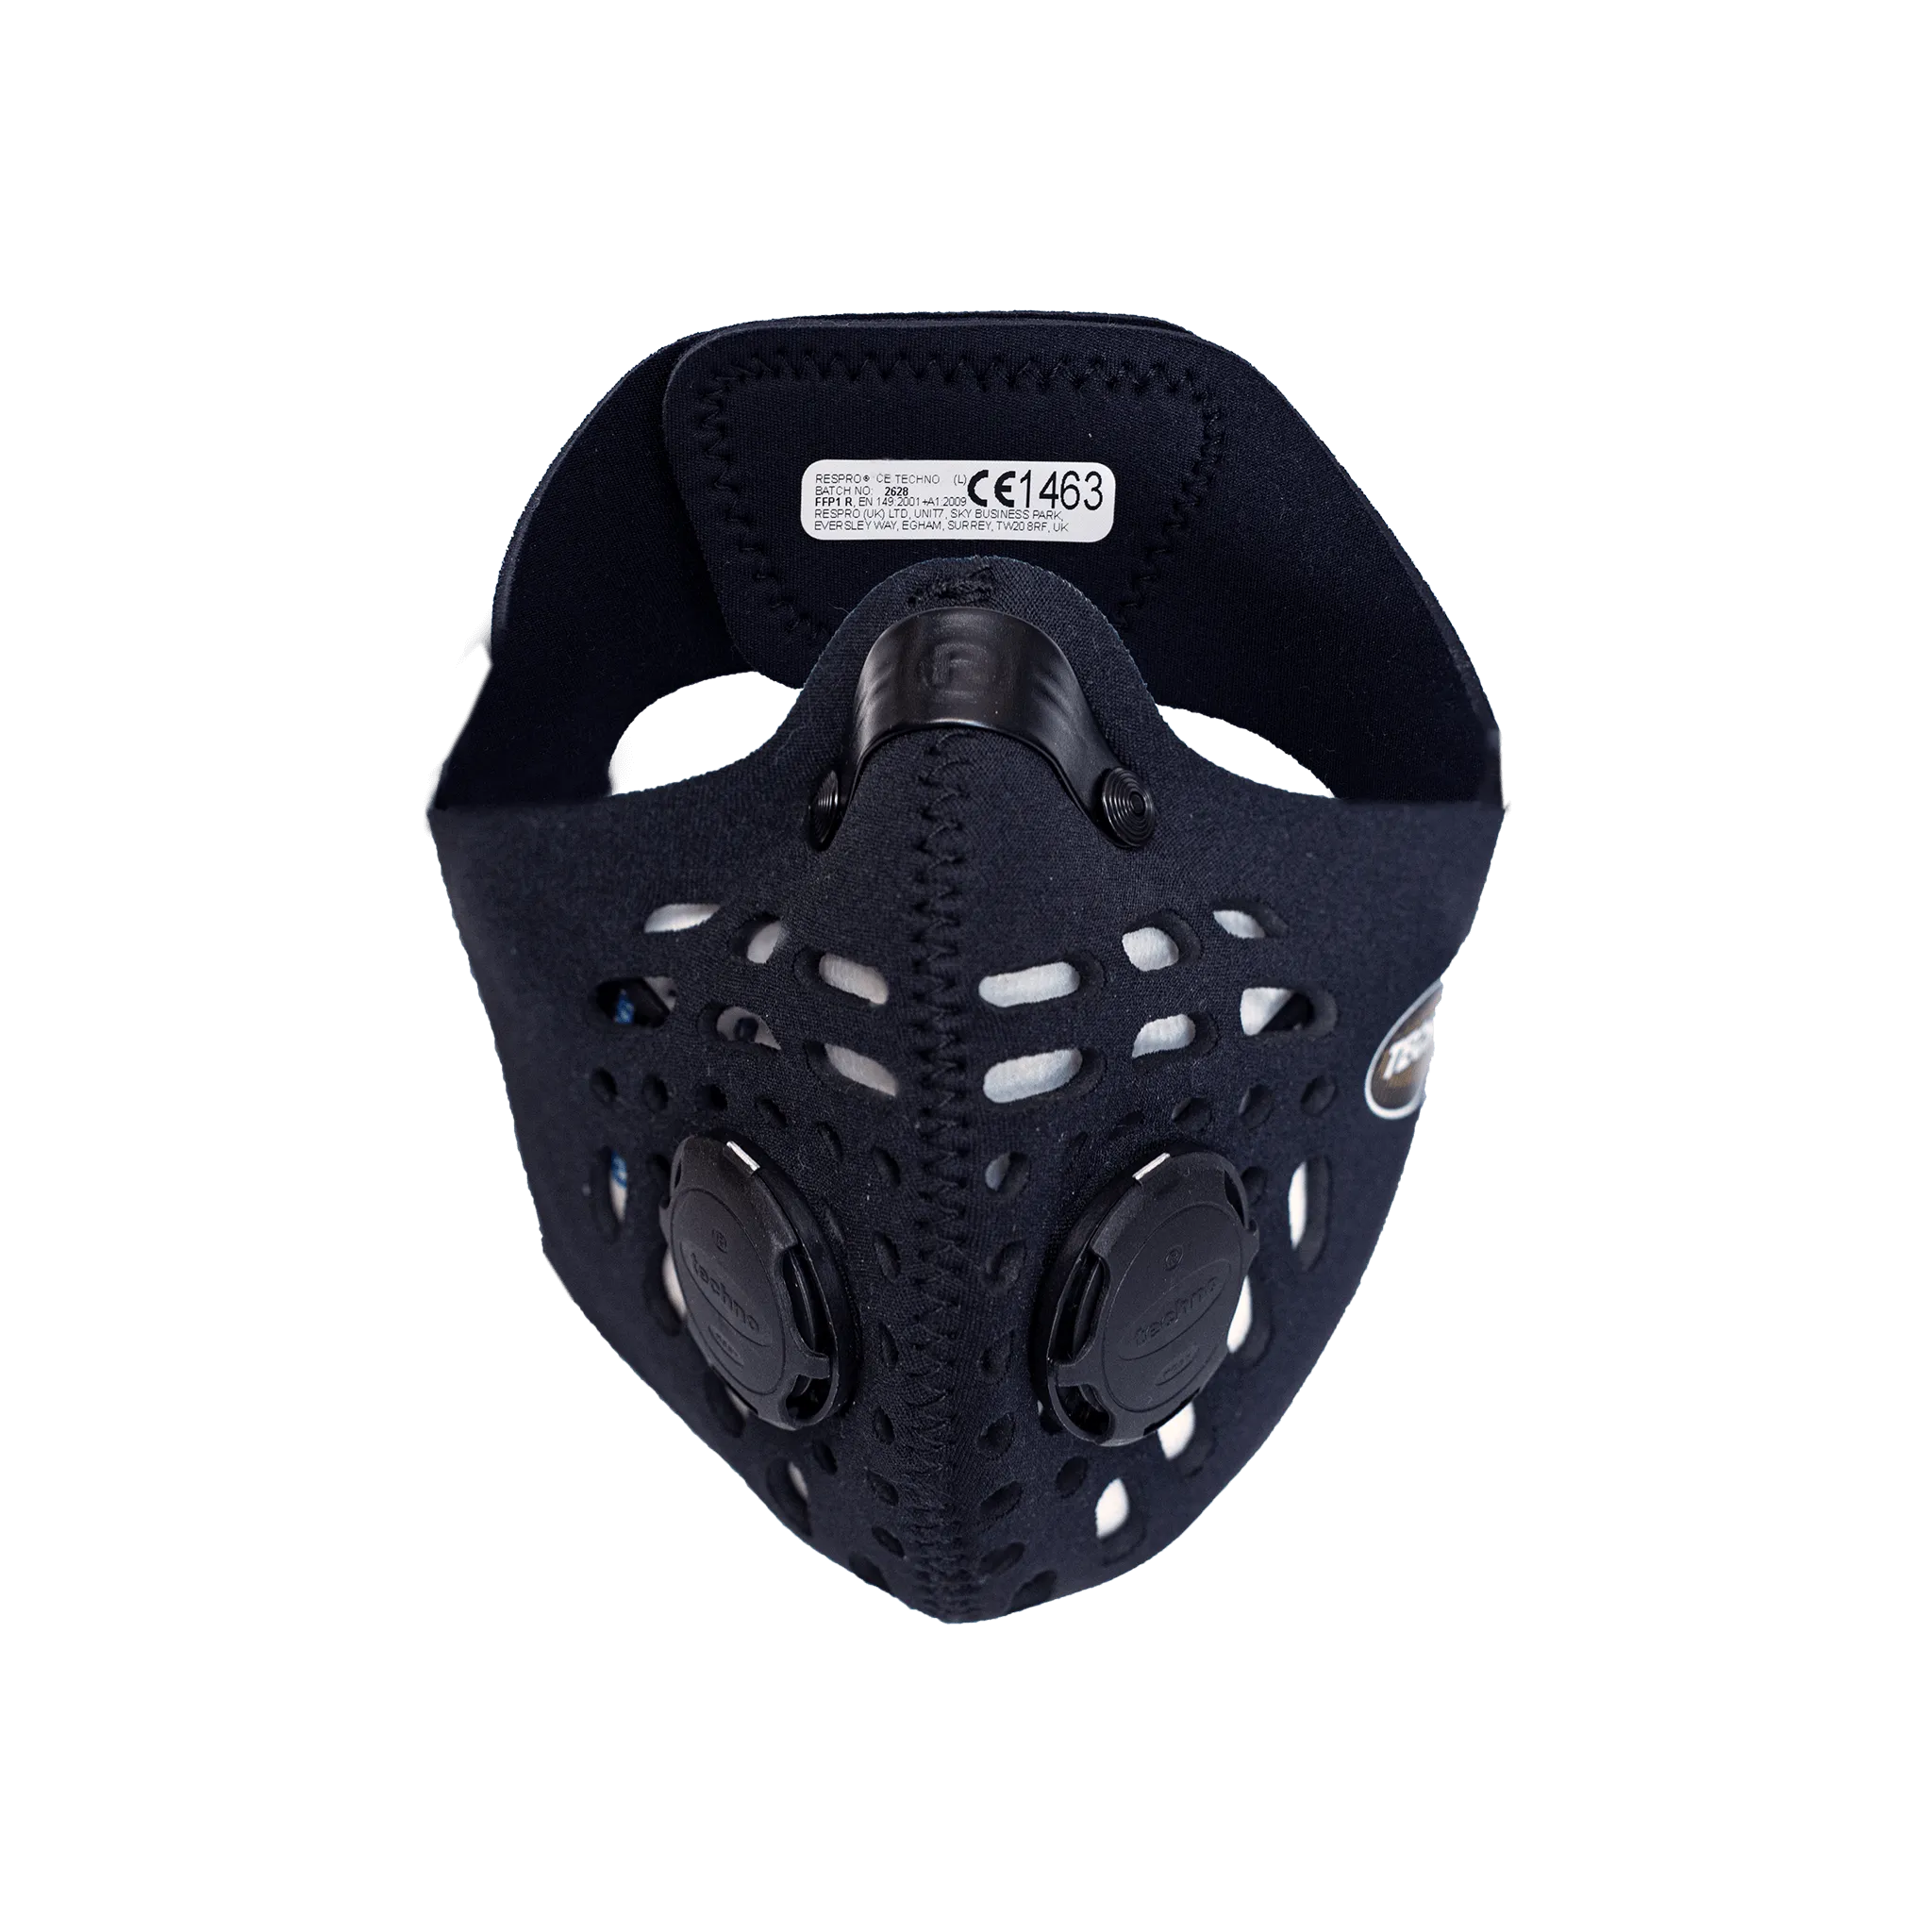 Respro CE Techno Black, maska antysmogowa, rozmiar M, 1 sztuka